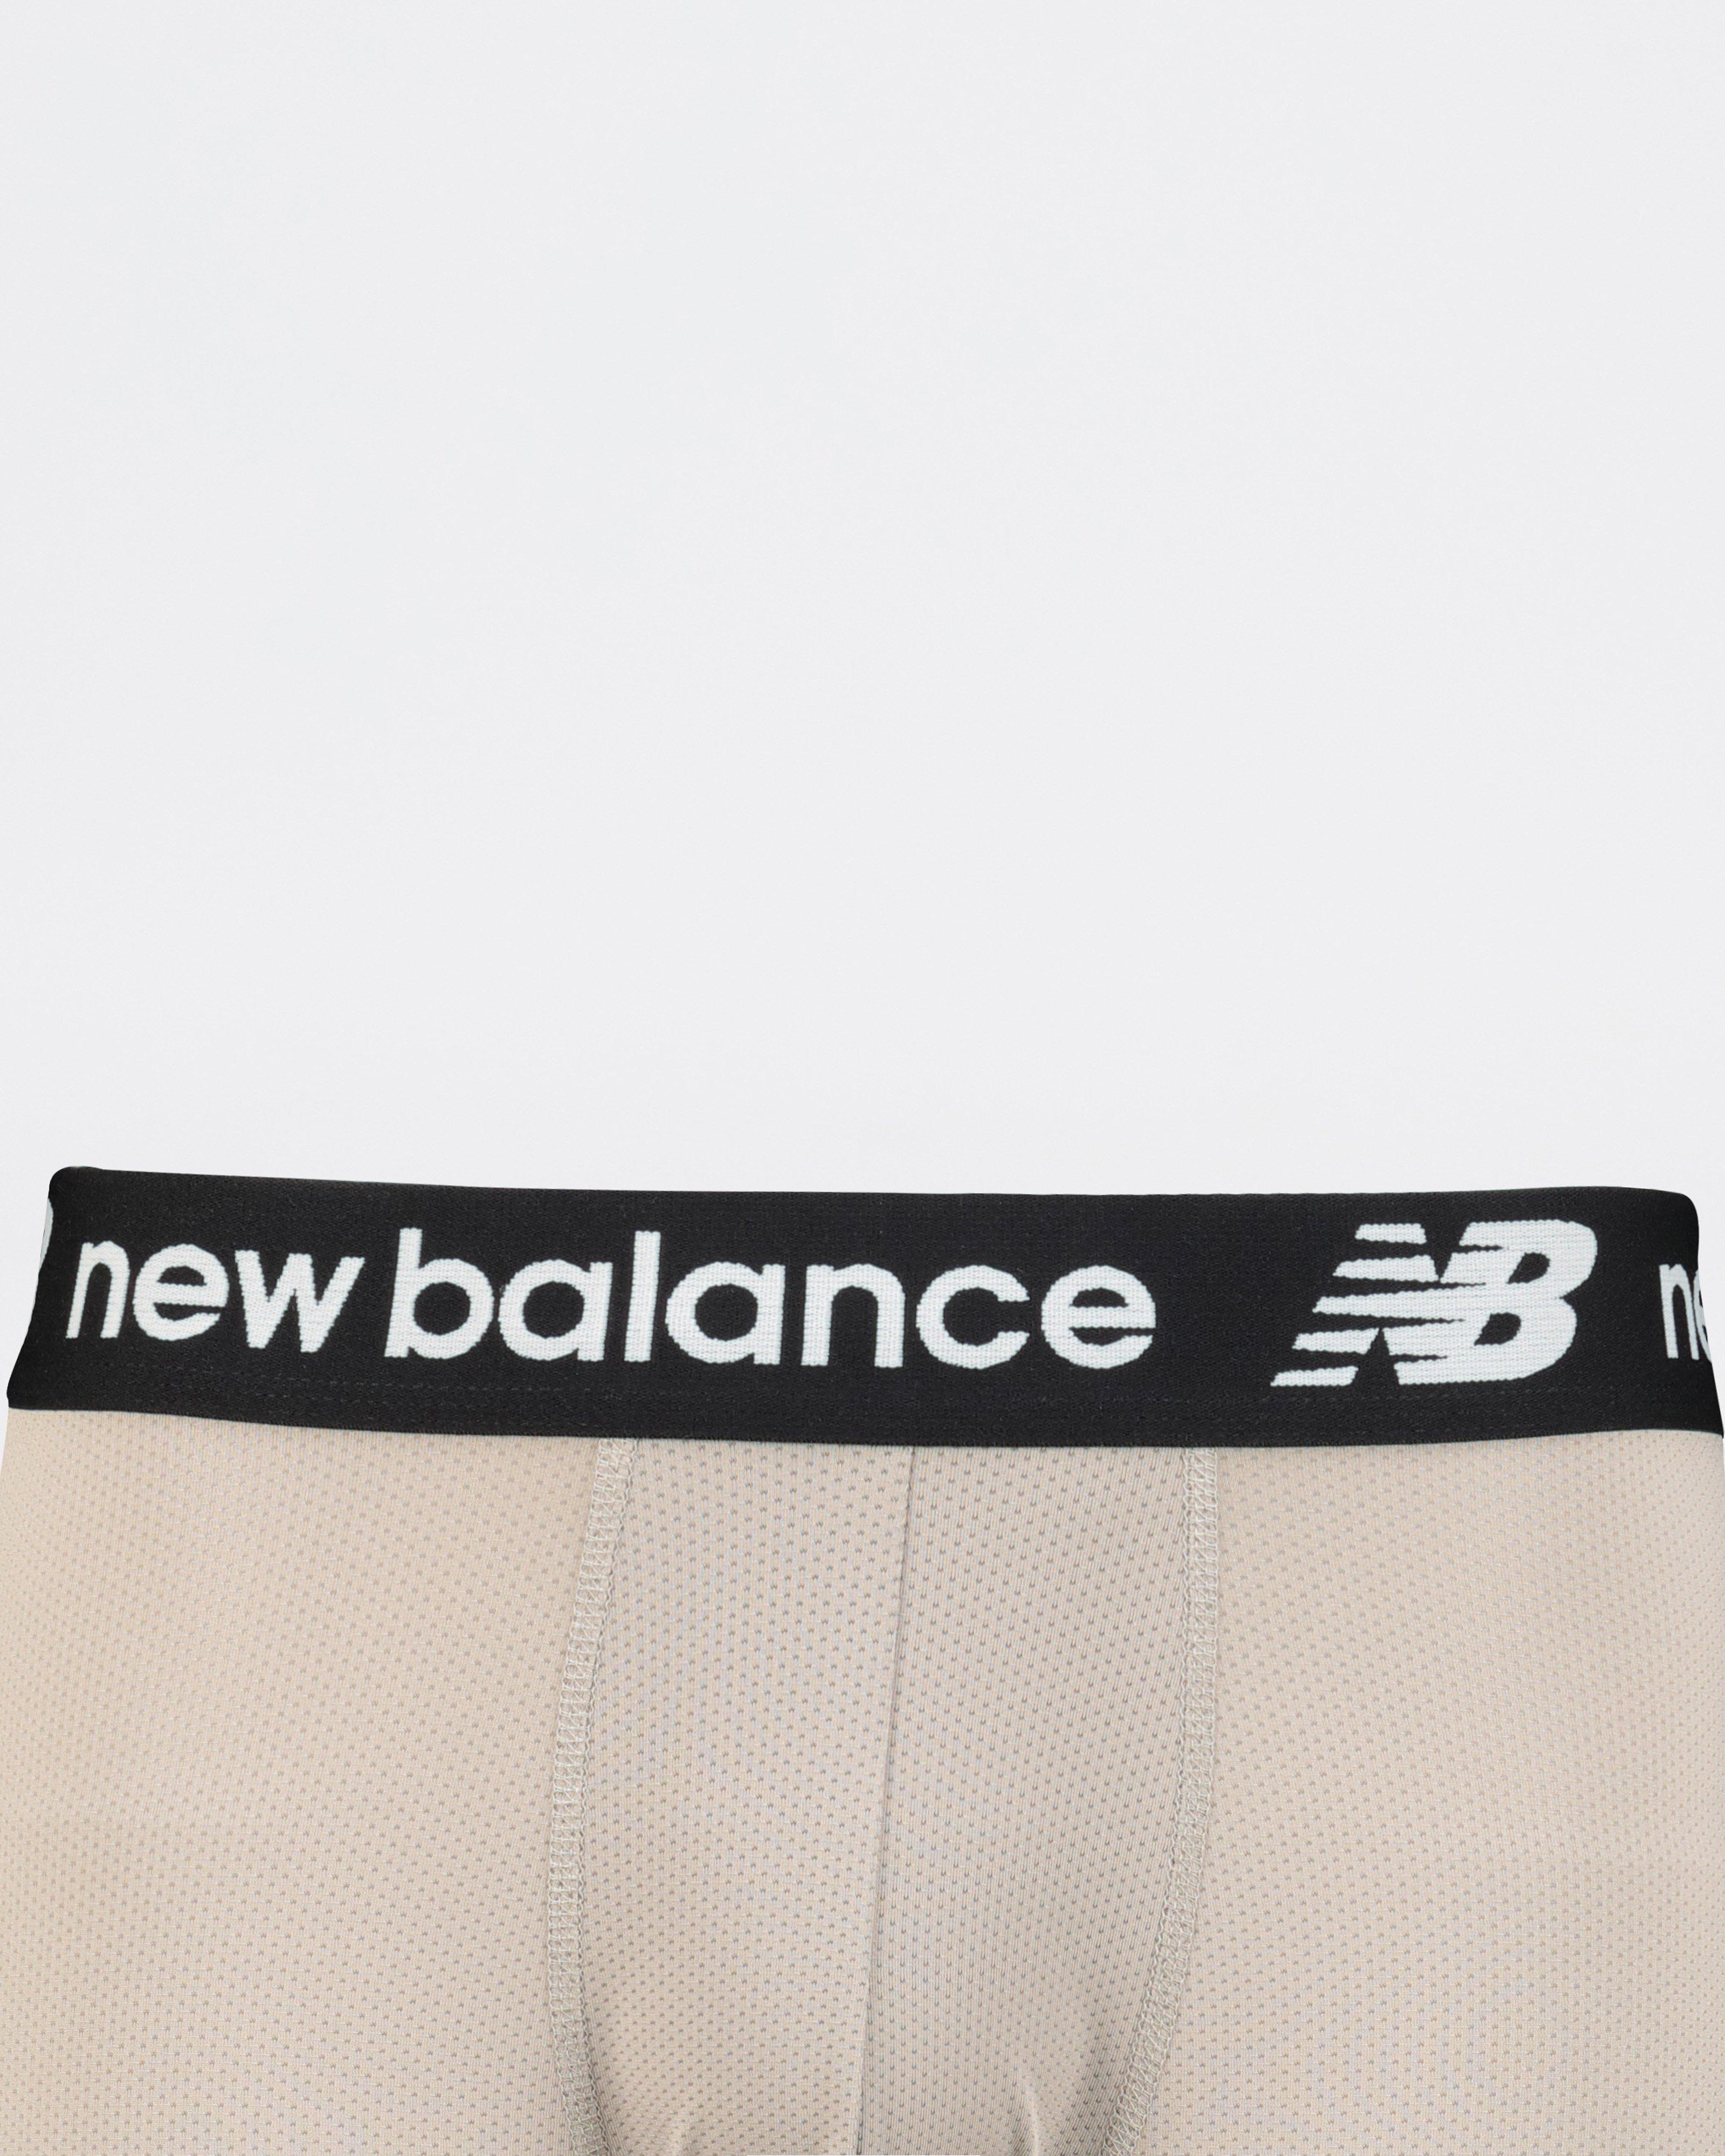 New Balance Mens Premium Performance 6 Boxer Brief Underwear (Pack of 2),  Black/Steel Woodgrain, Medium (32-34) price in UAE,  UAE